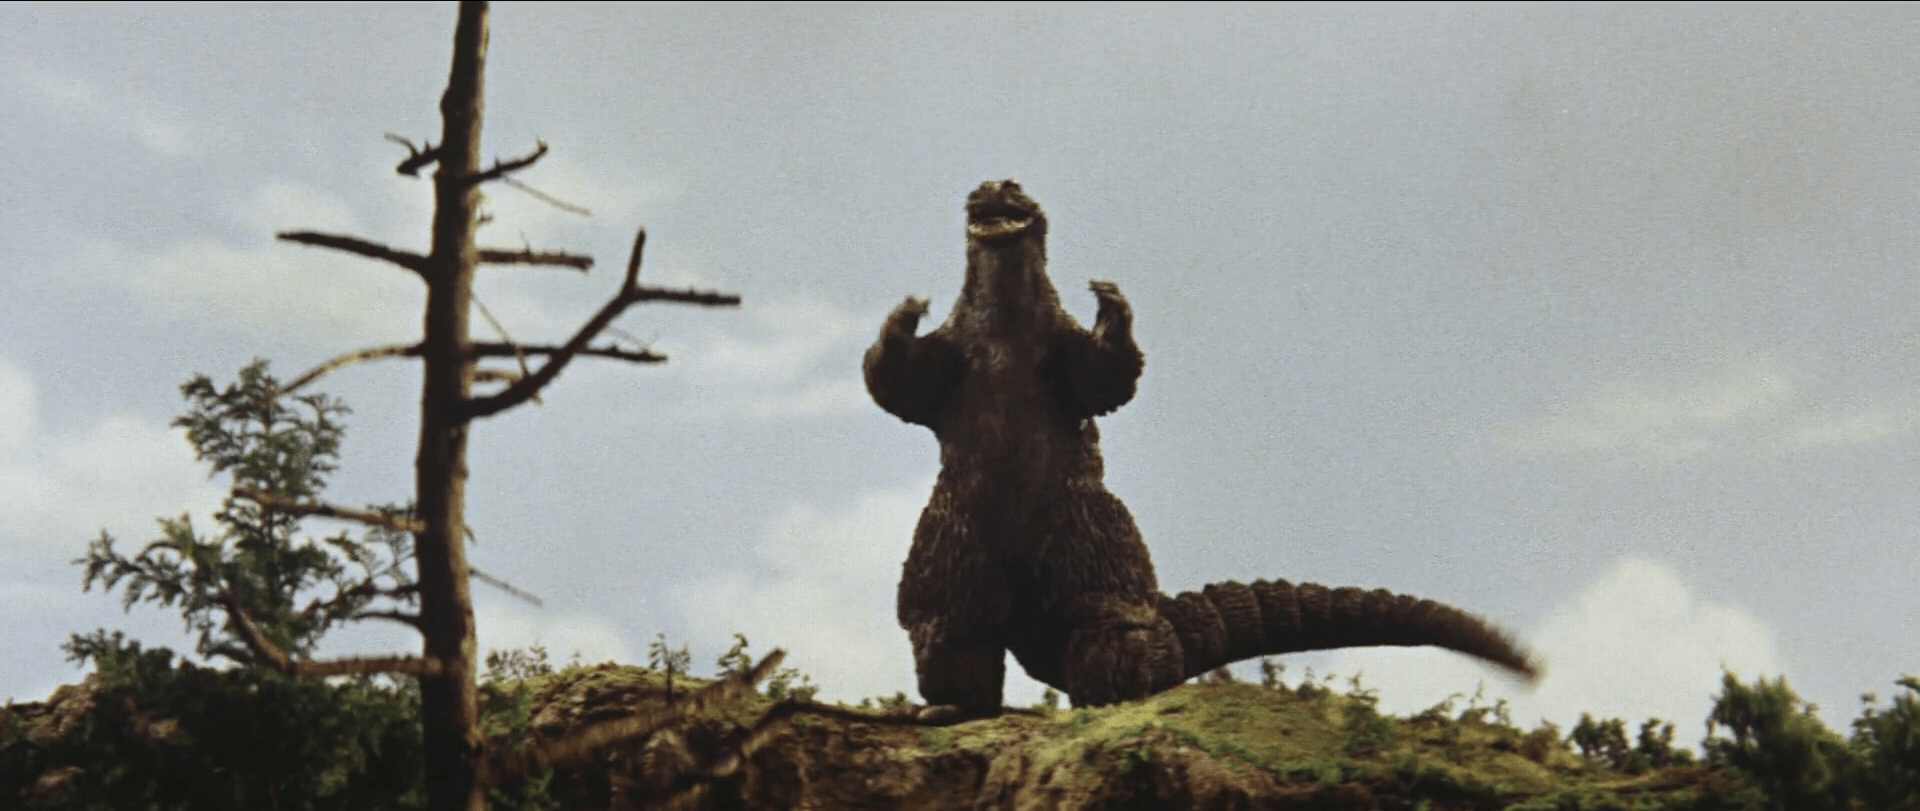 King Kong Vs Godzilla (1962) by Ishiro Honda